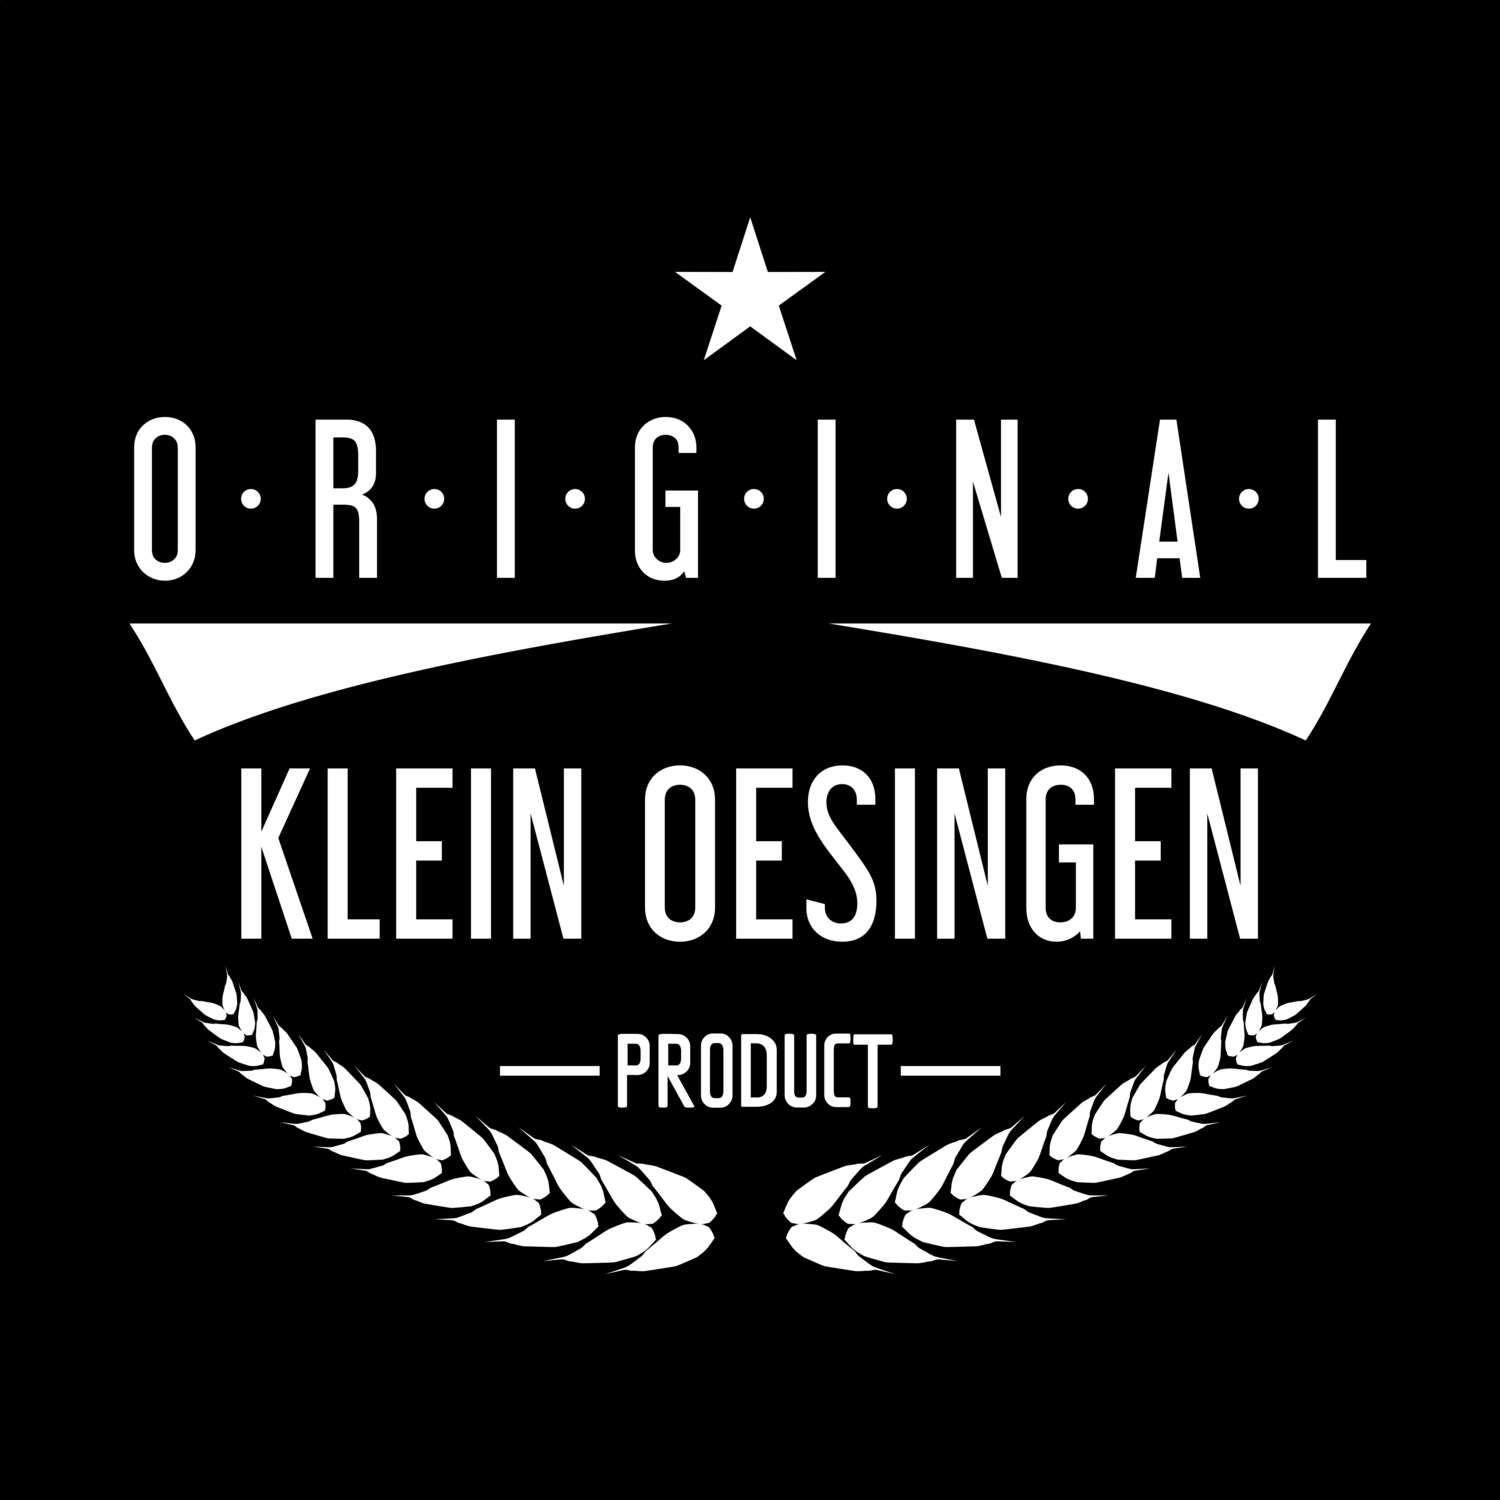 Klein Oesingen T-Shirt »Original Product«